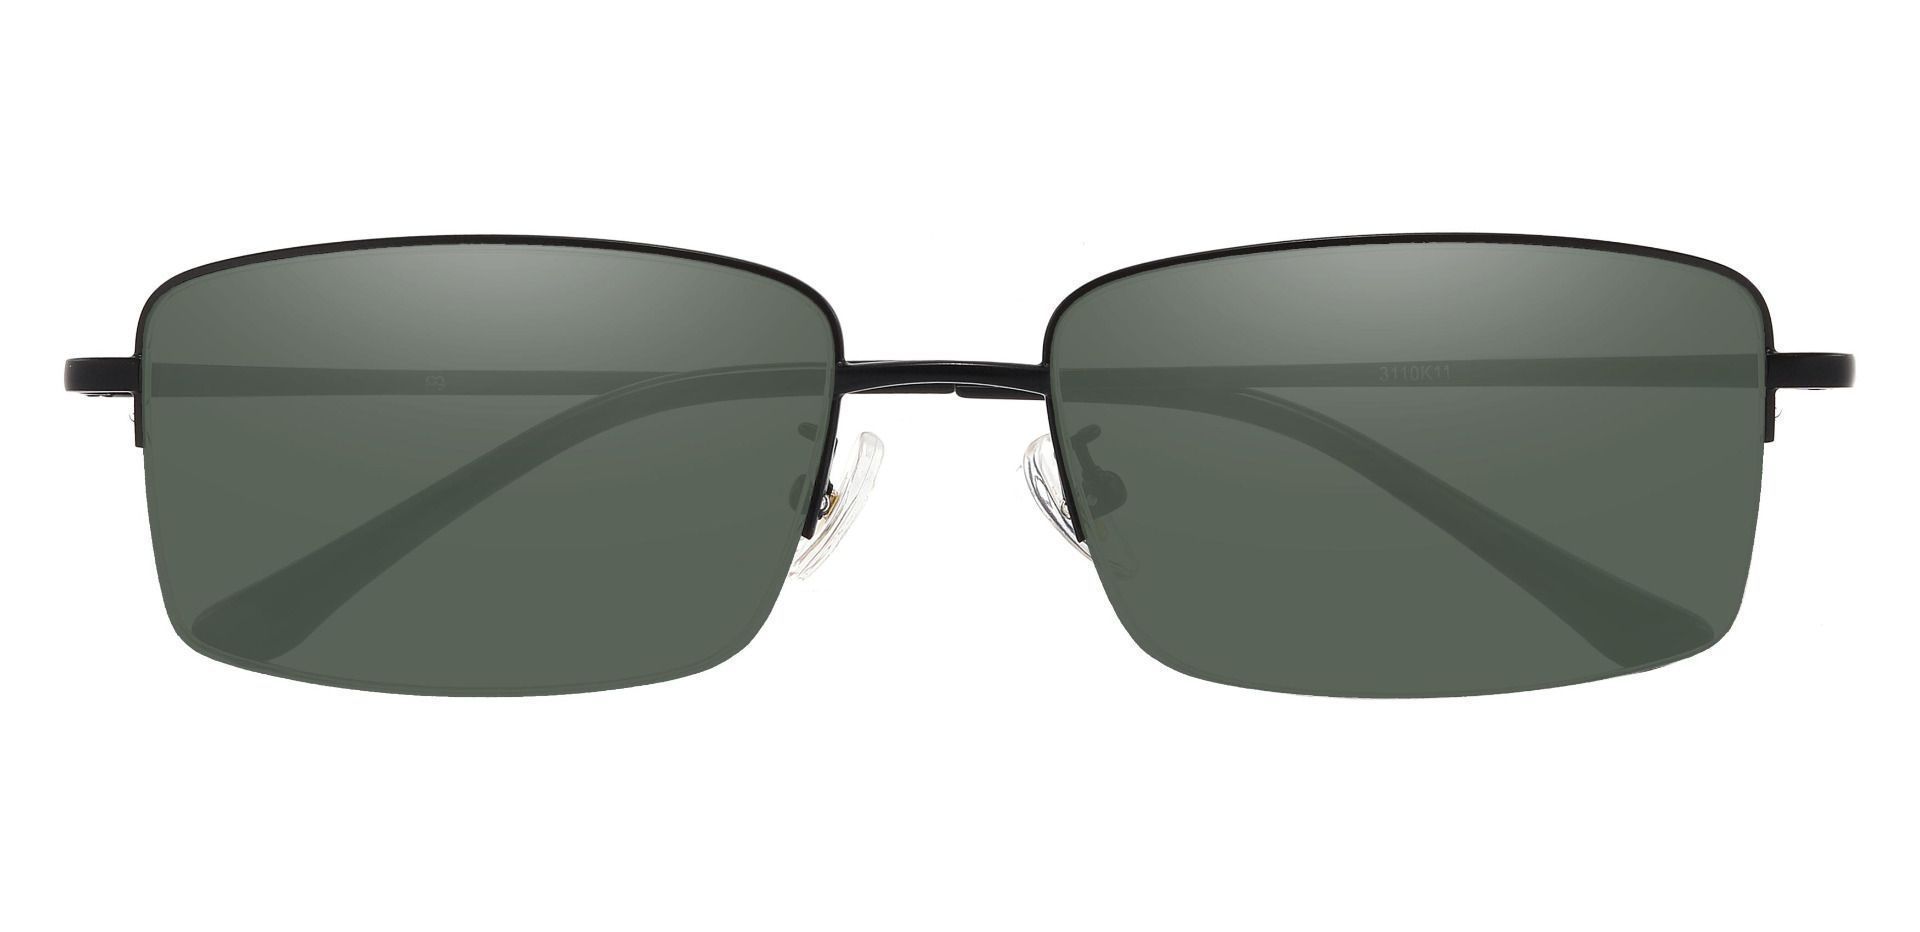 Bellmont Rectangle Reading Sunglasses - Black Frame With Green Lenses